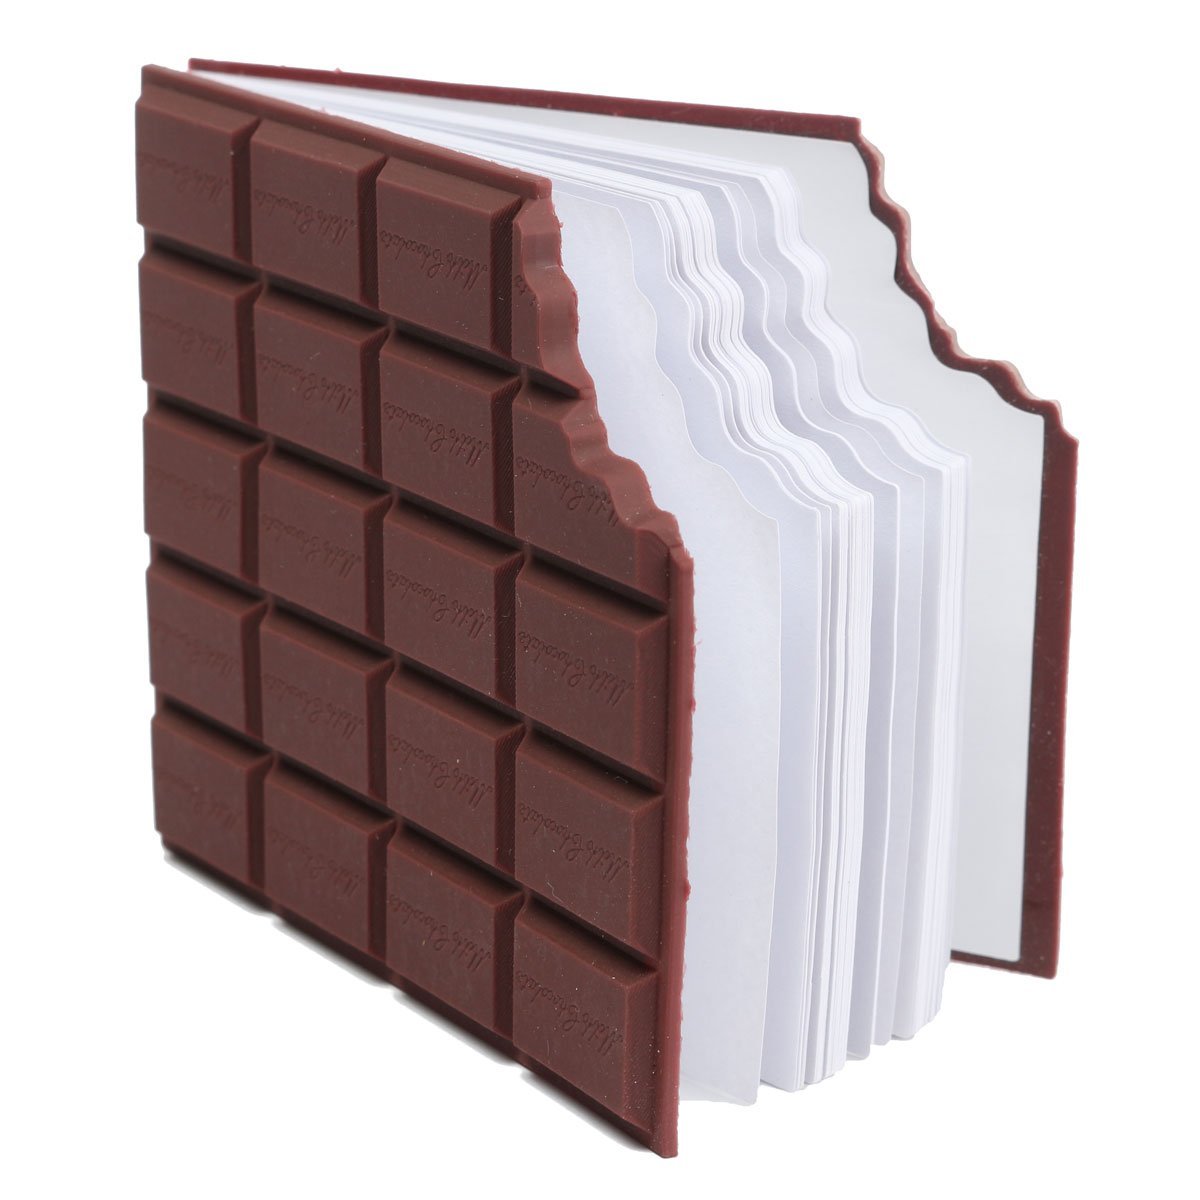 Bloc note chocolat - /medias/166556760772.jpg